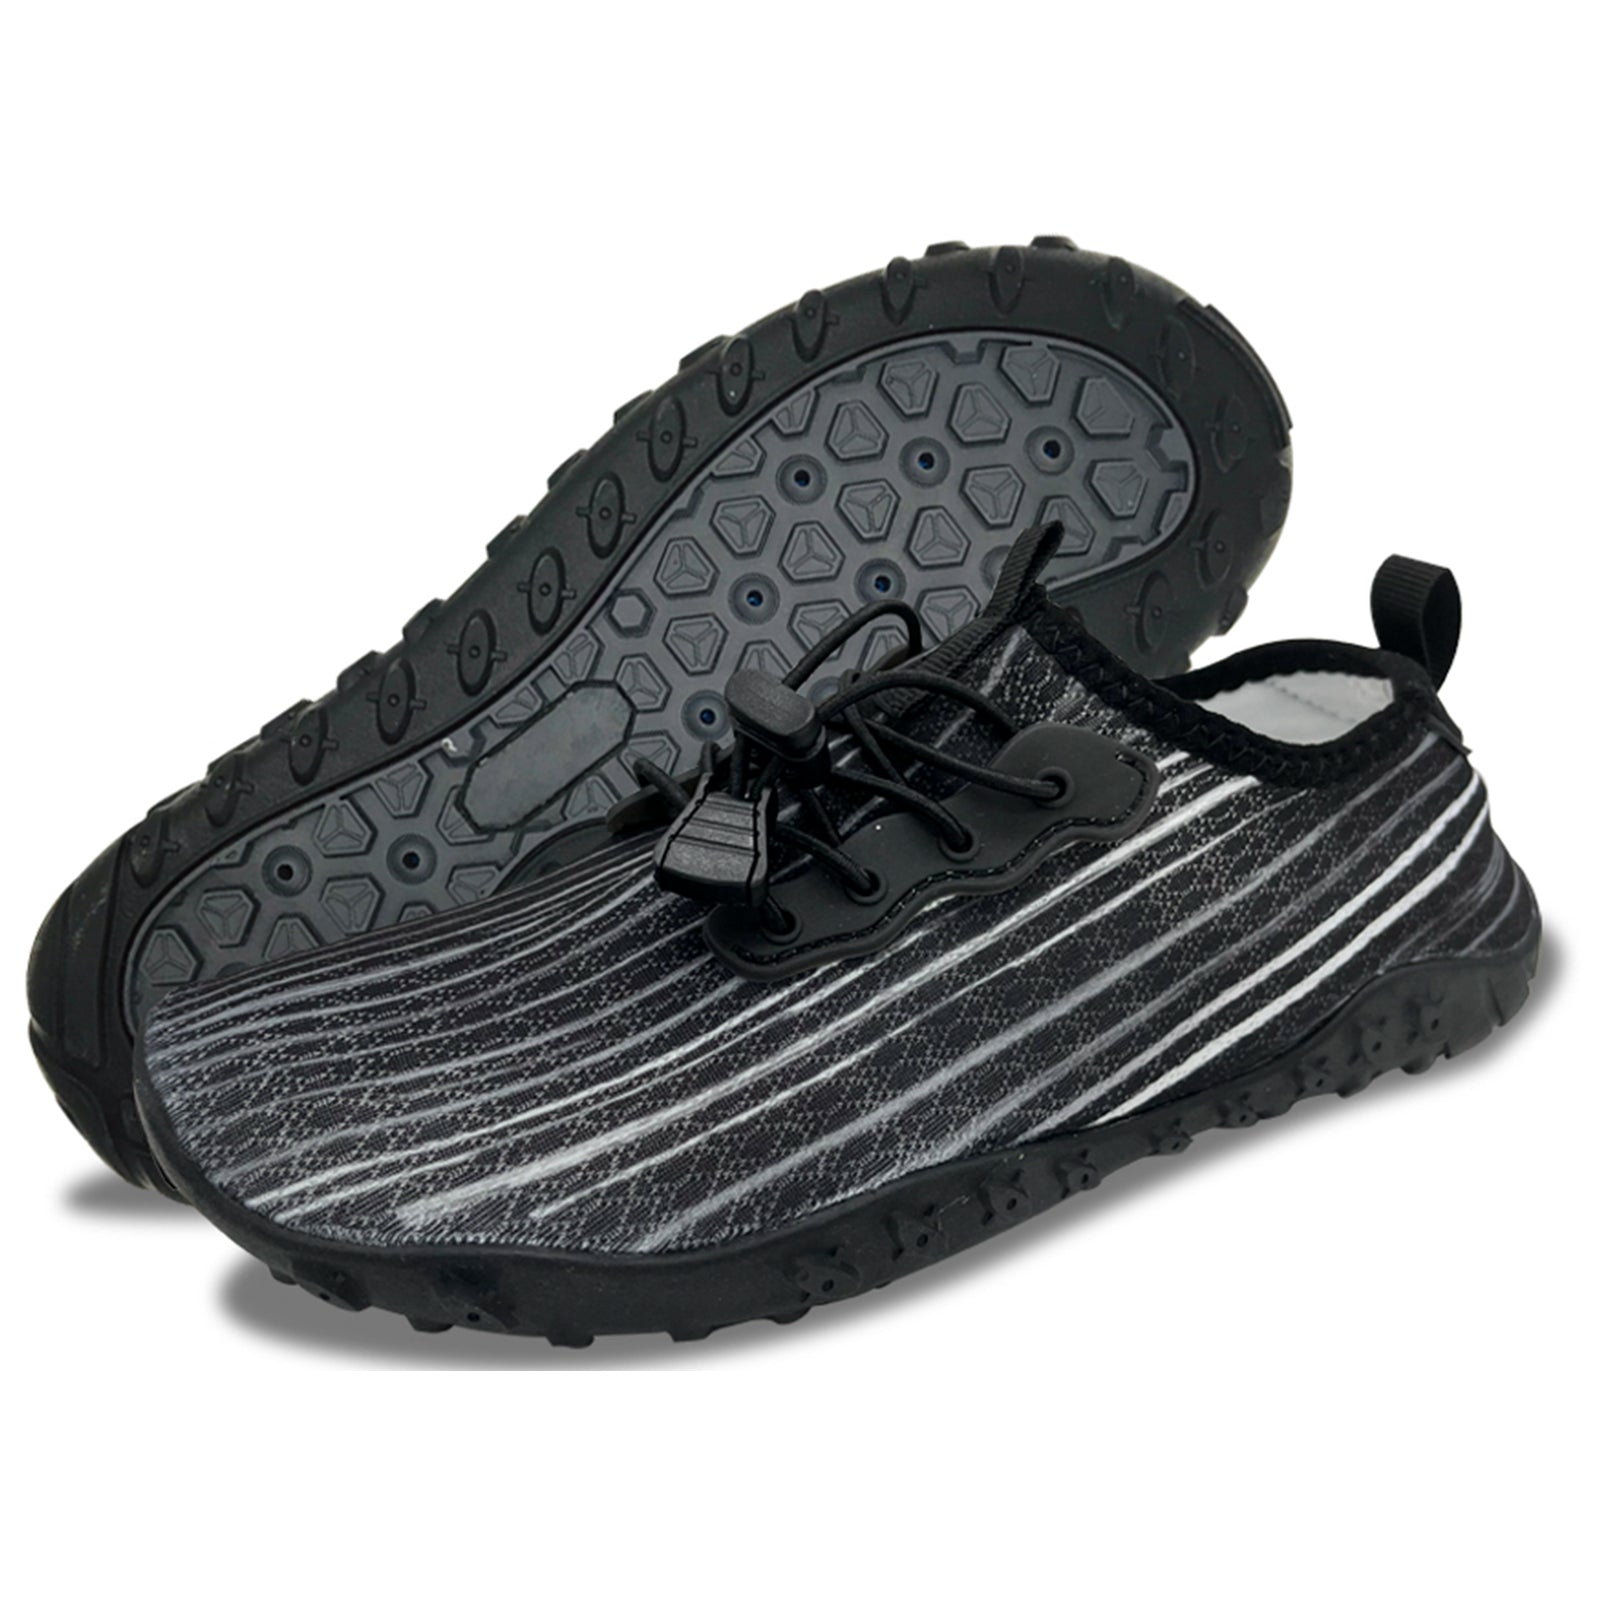 Water Shoes for Men and Women Soft Breathable Slip-on Aqua Shoes Aqua Socks for Swim Beach Pool Surf Yoga (Black Size US 9.5)